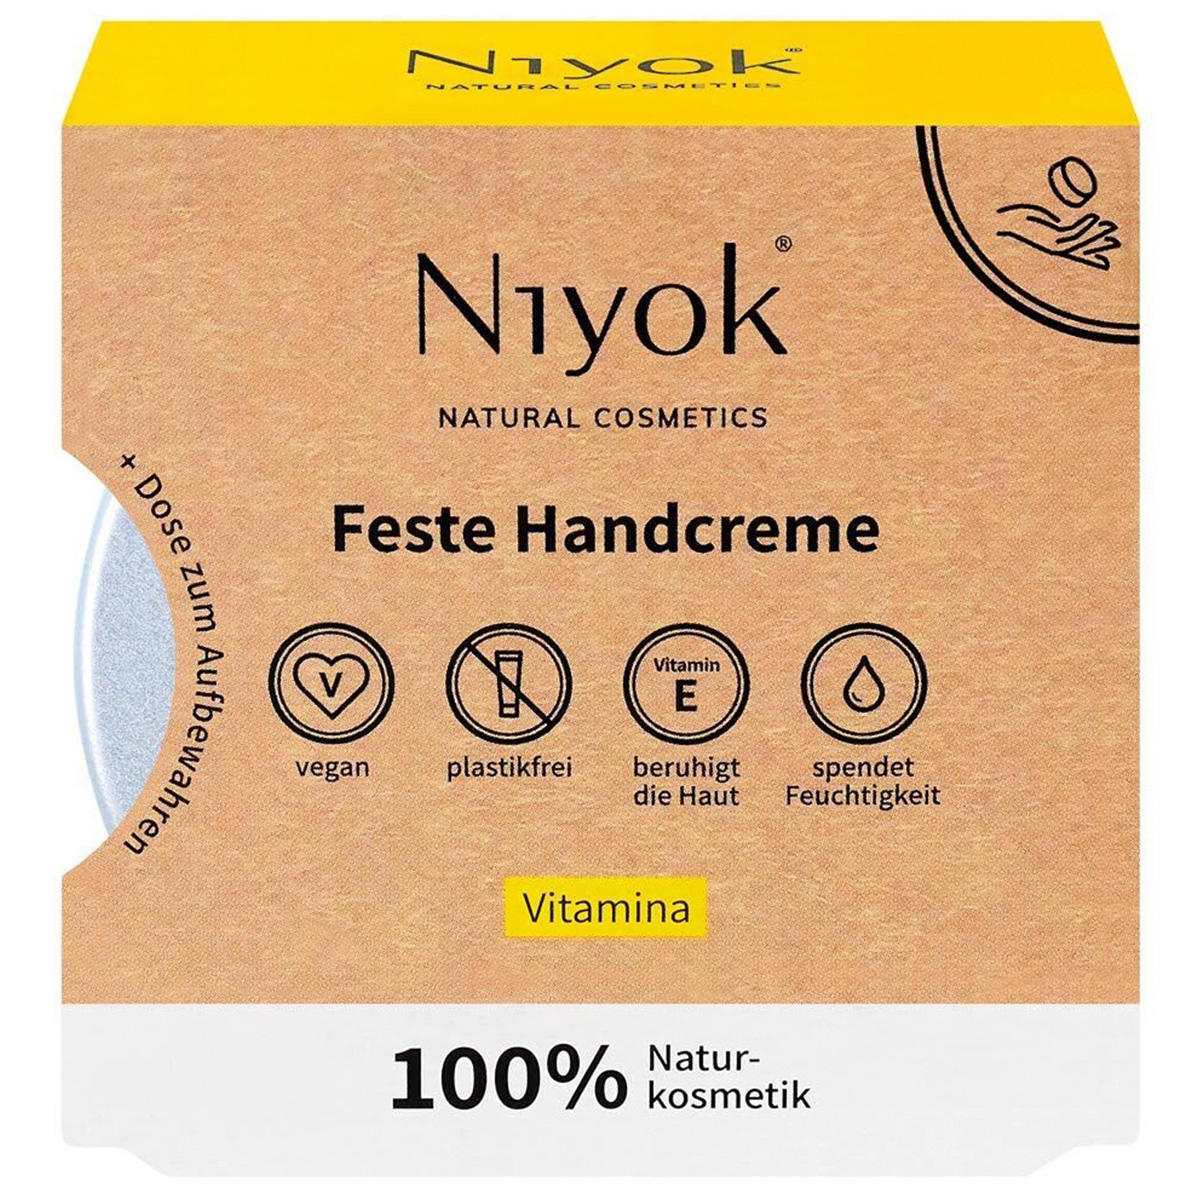 Niyok Vitamina solid hand cream 50 g - 1